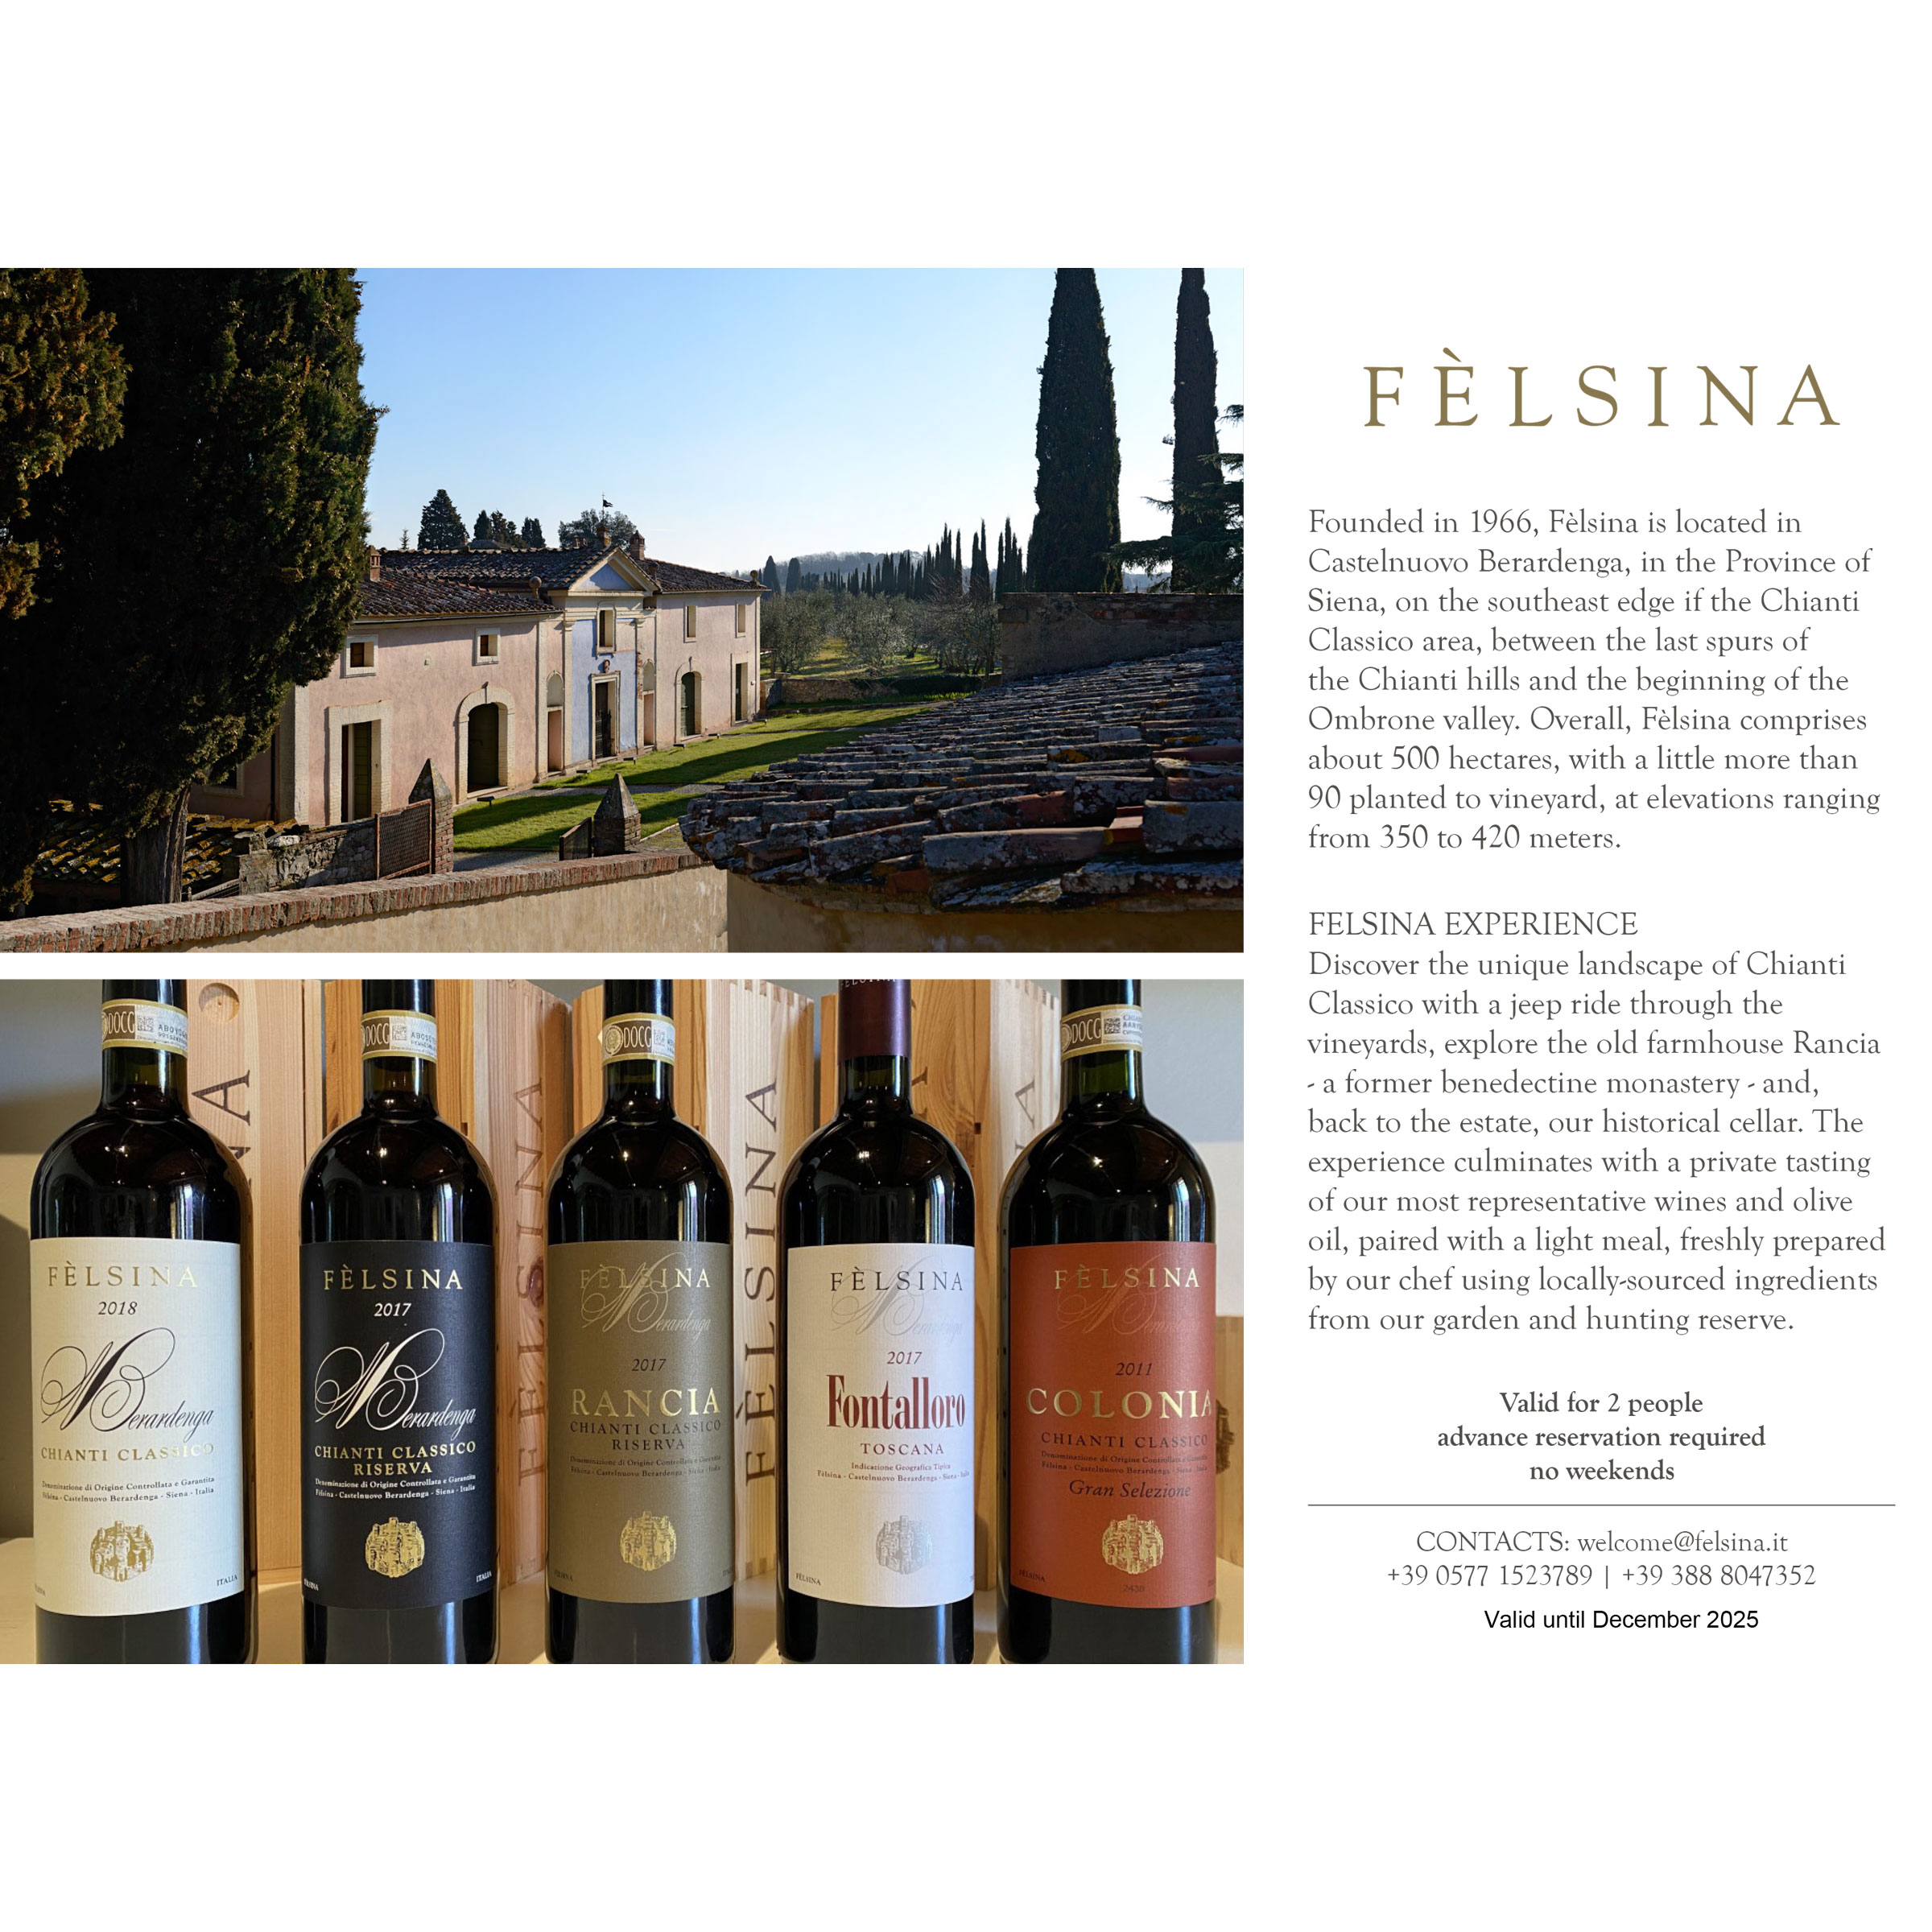 Felsina VIP Tour and Tasting in Chianti